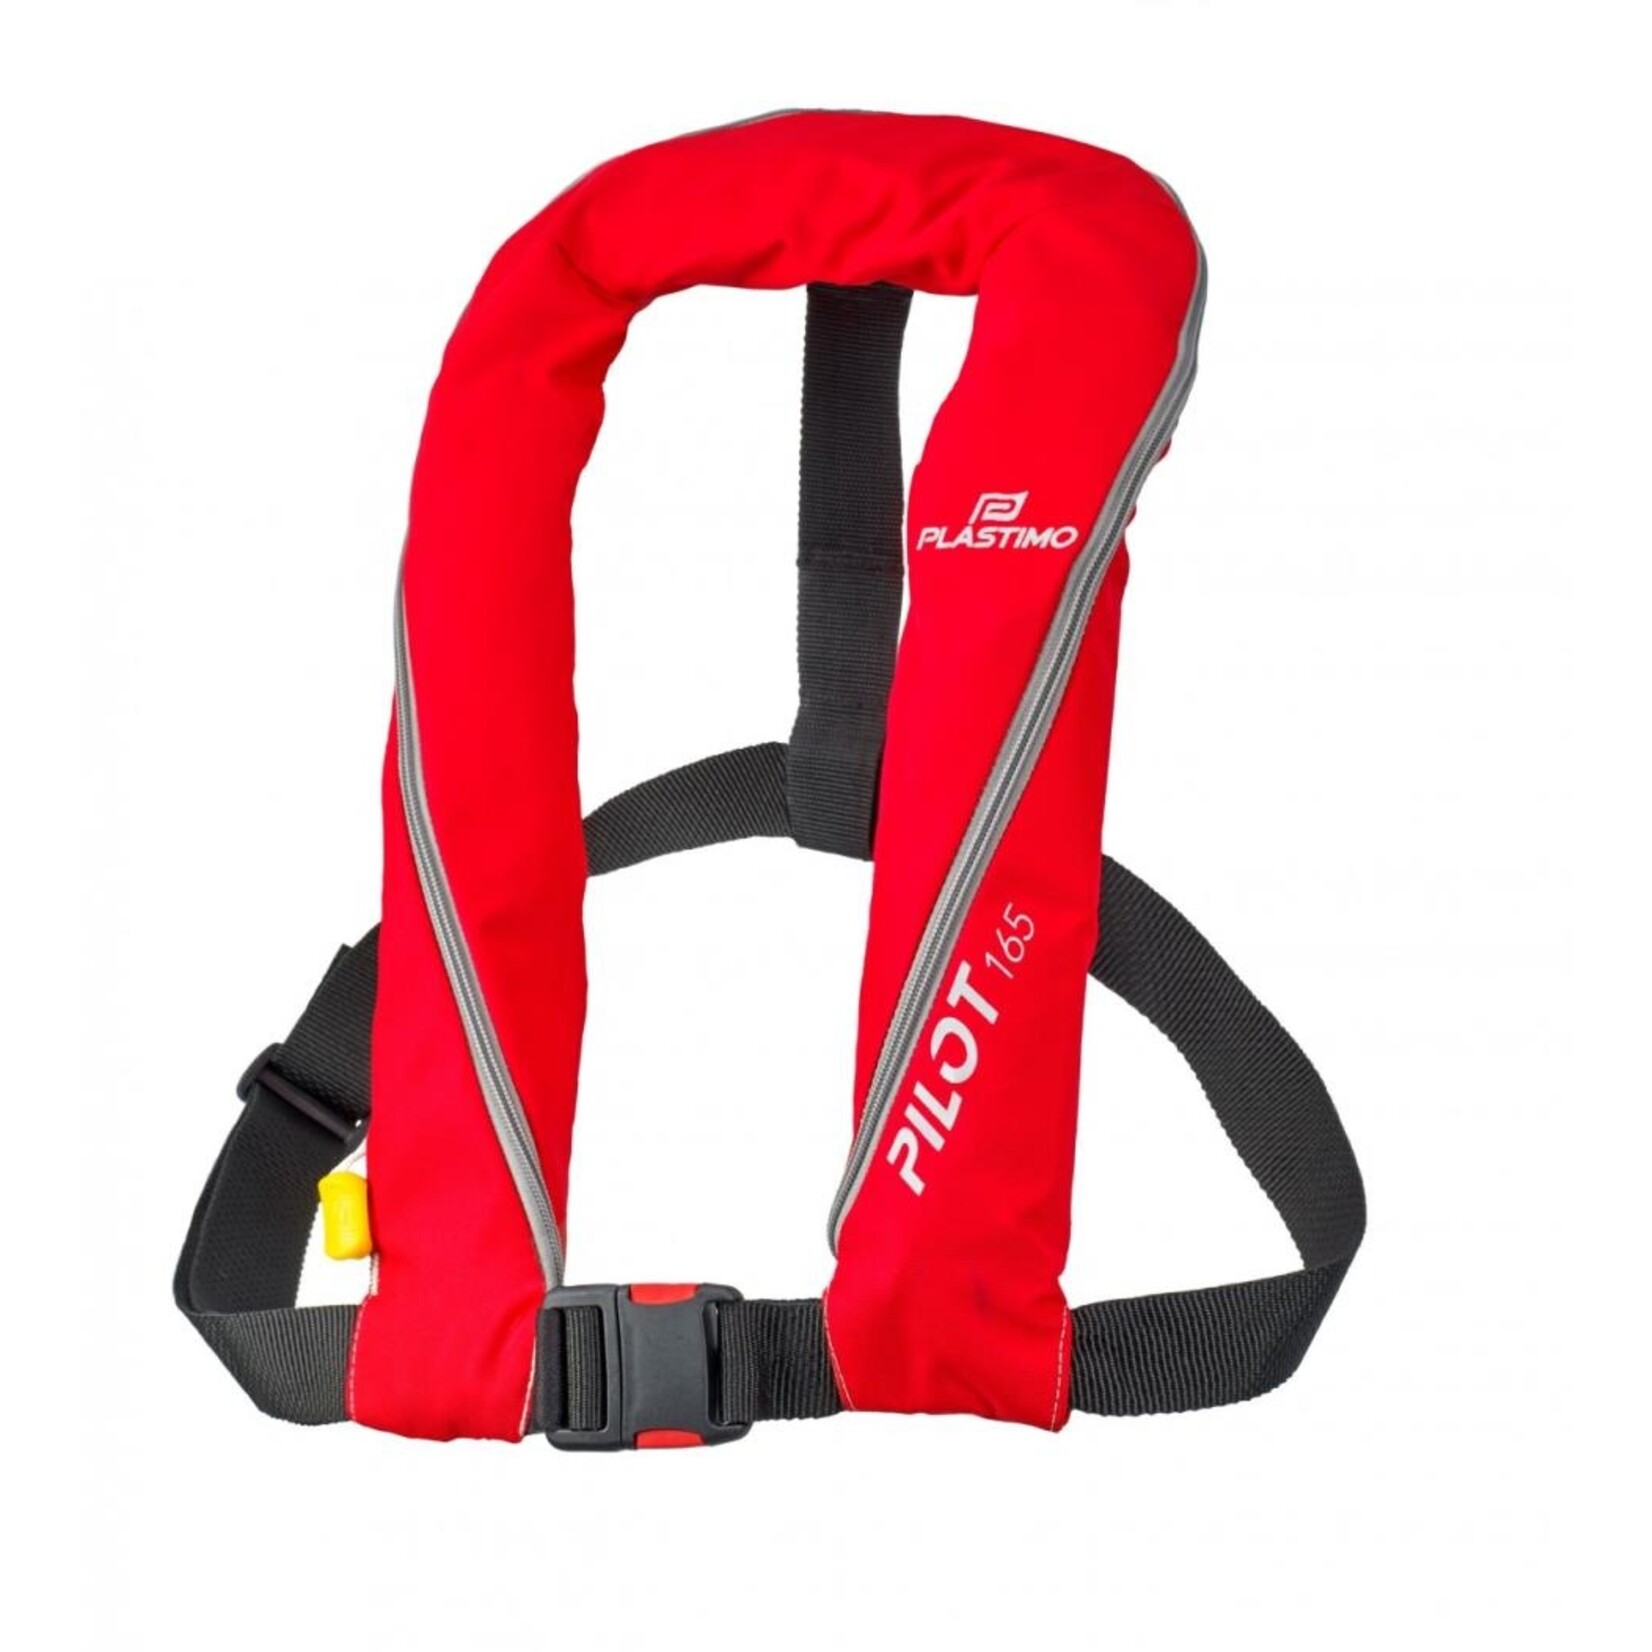 Plastimo Pilot 165 zip hammar red with harness